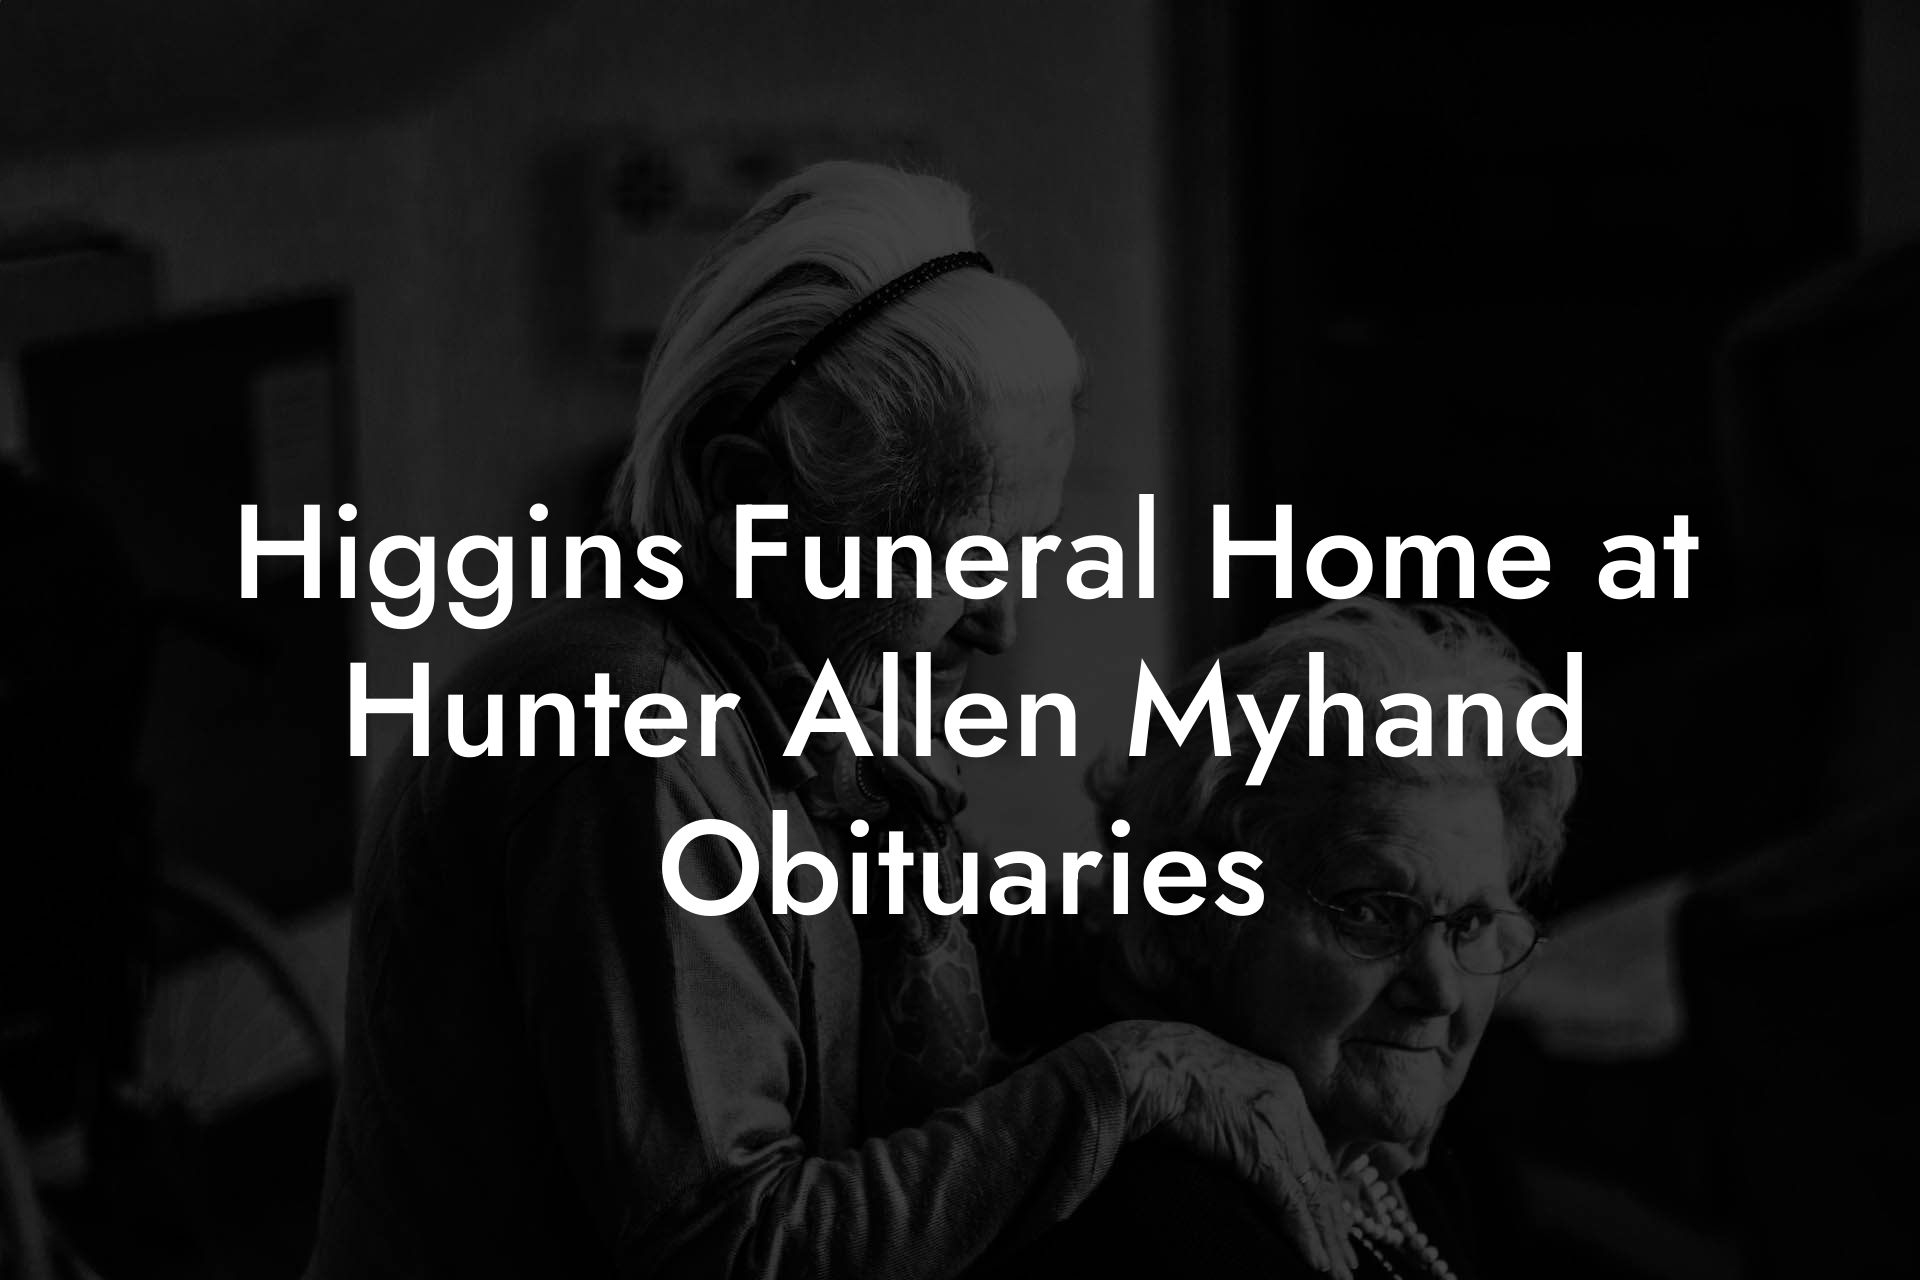 Higgins Funeral Home at Hunter Allen Myhand Obituaries